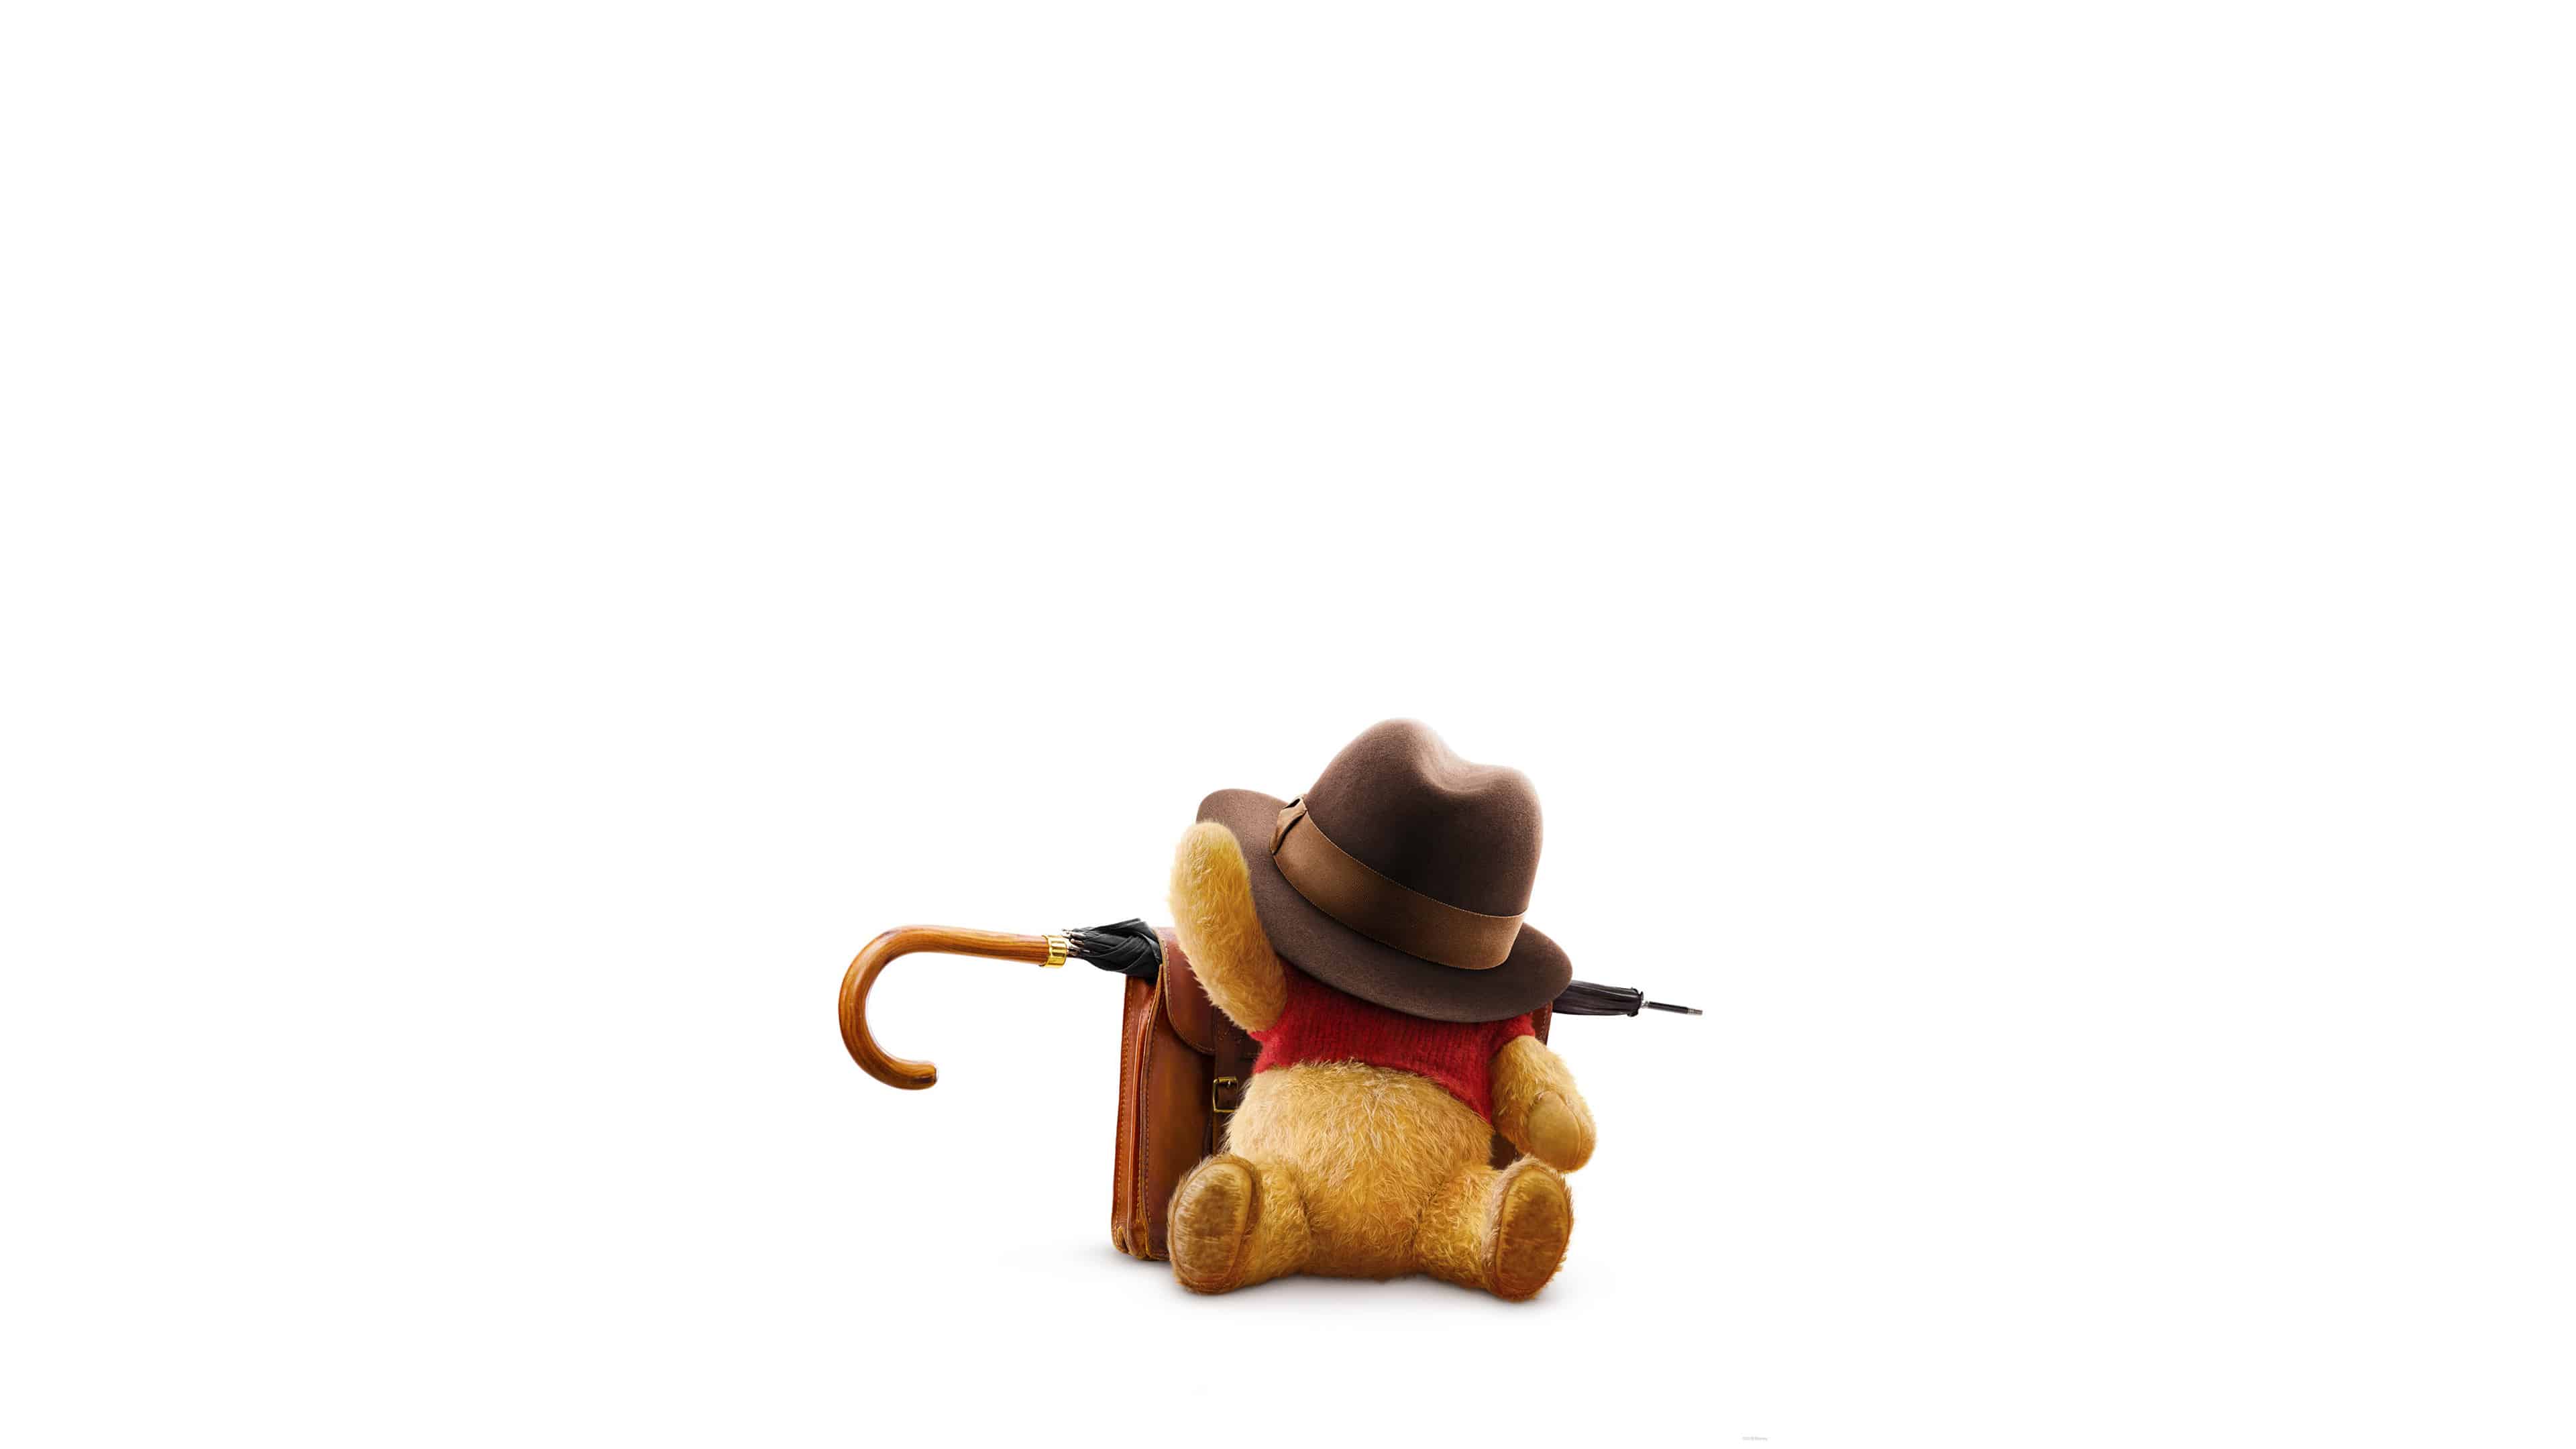 Christopher Robin Winnie The Pooh UHD 4K Wallpaper - Pixelz.cc